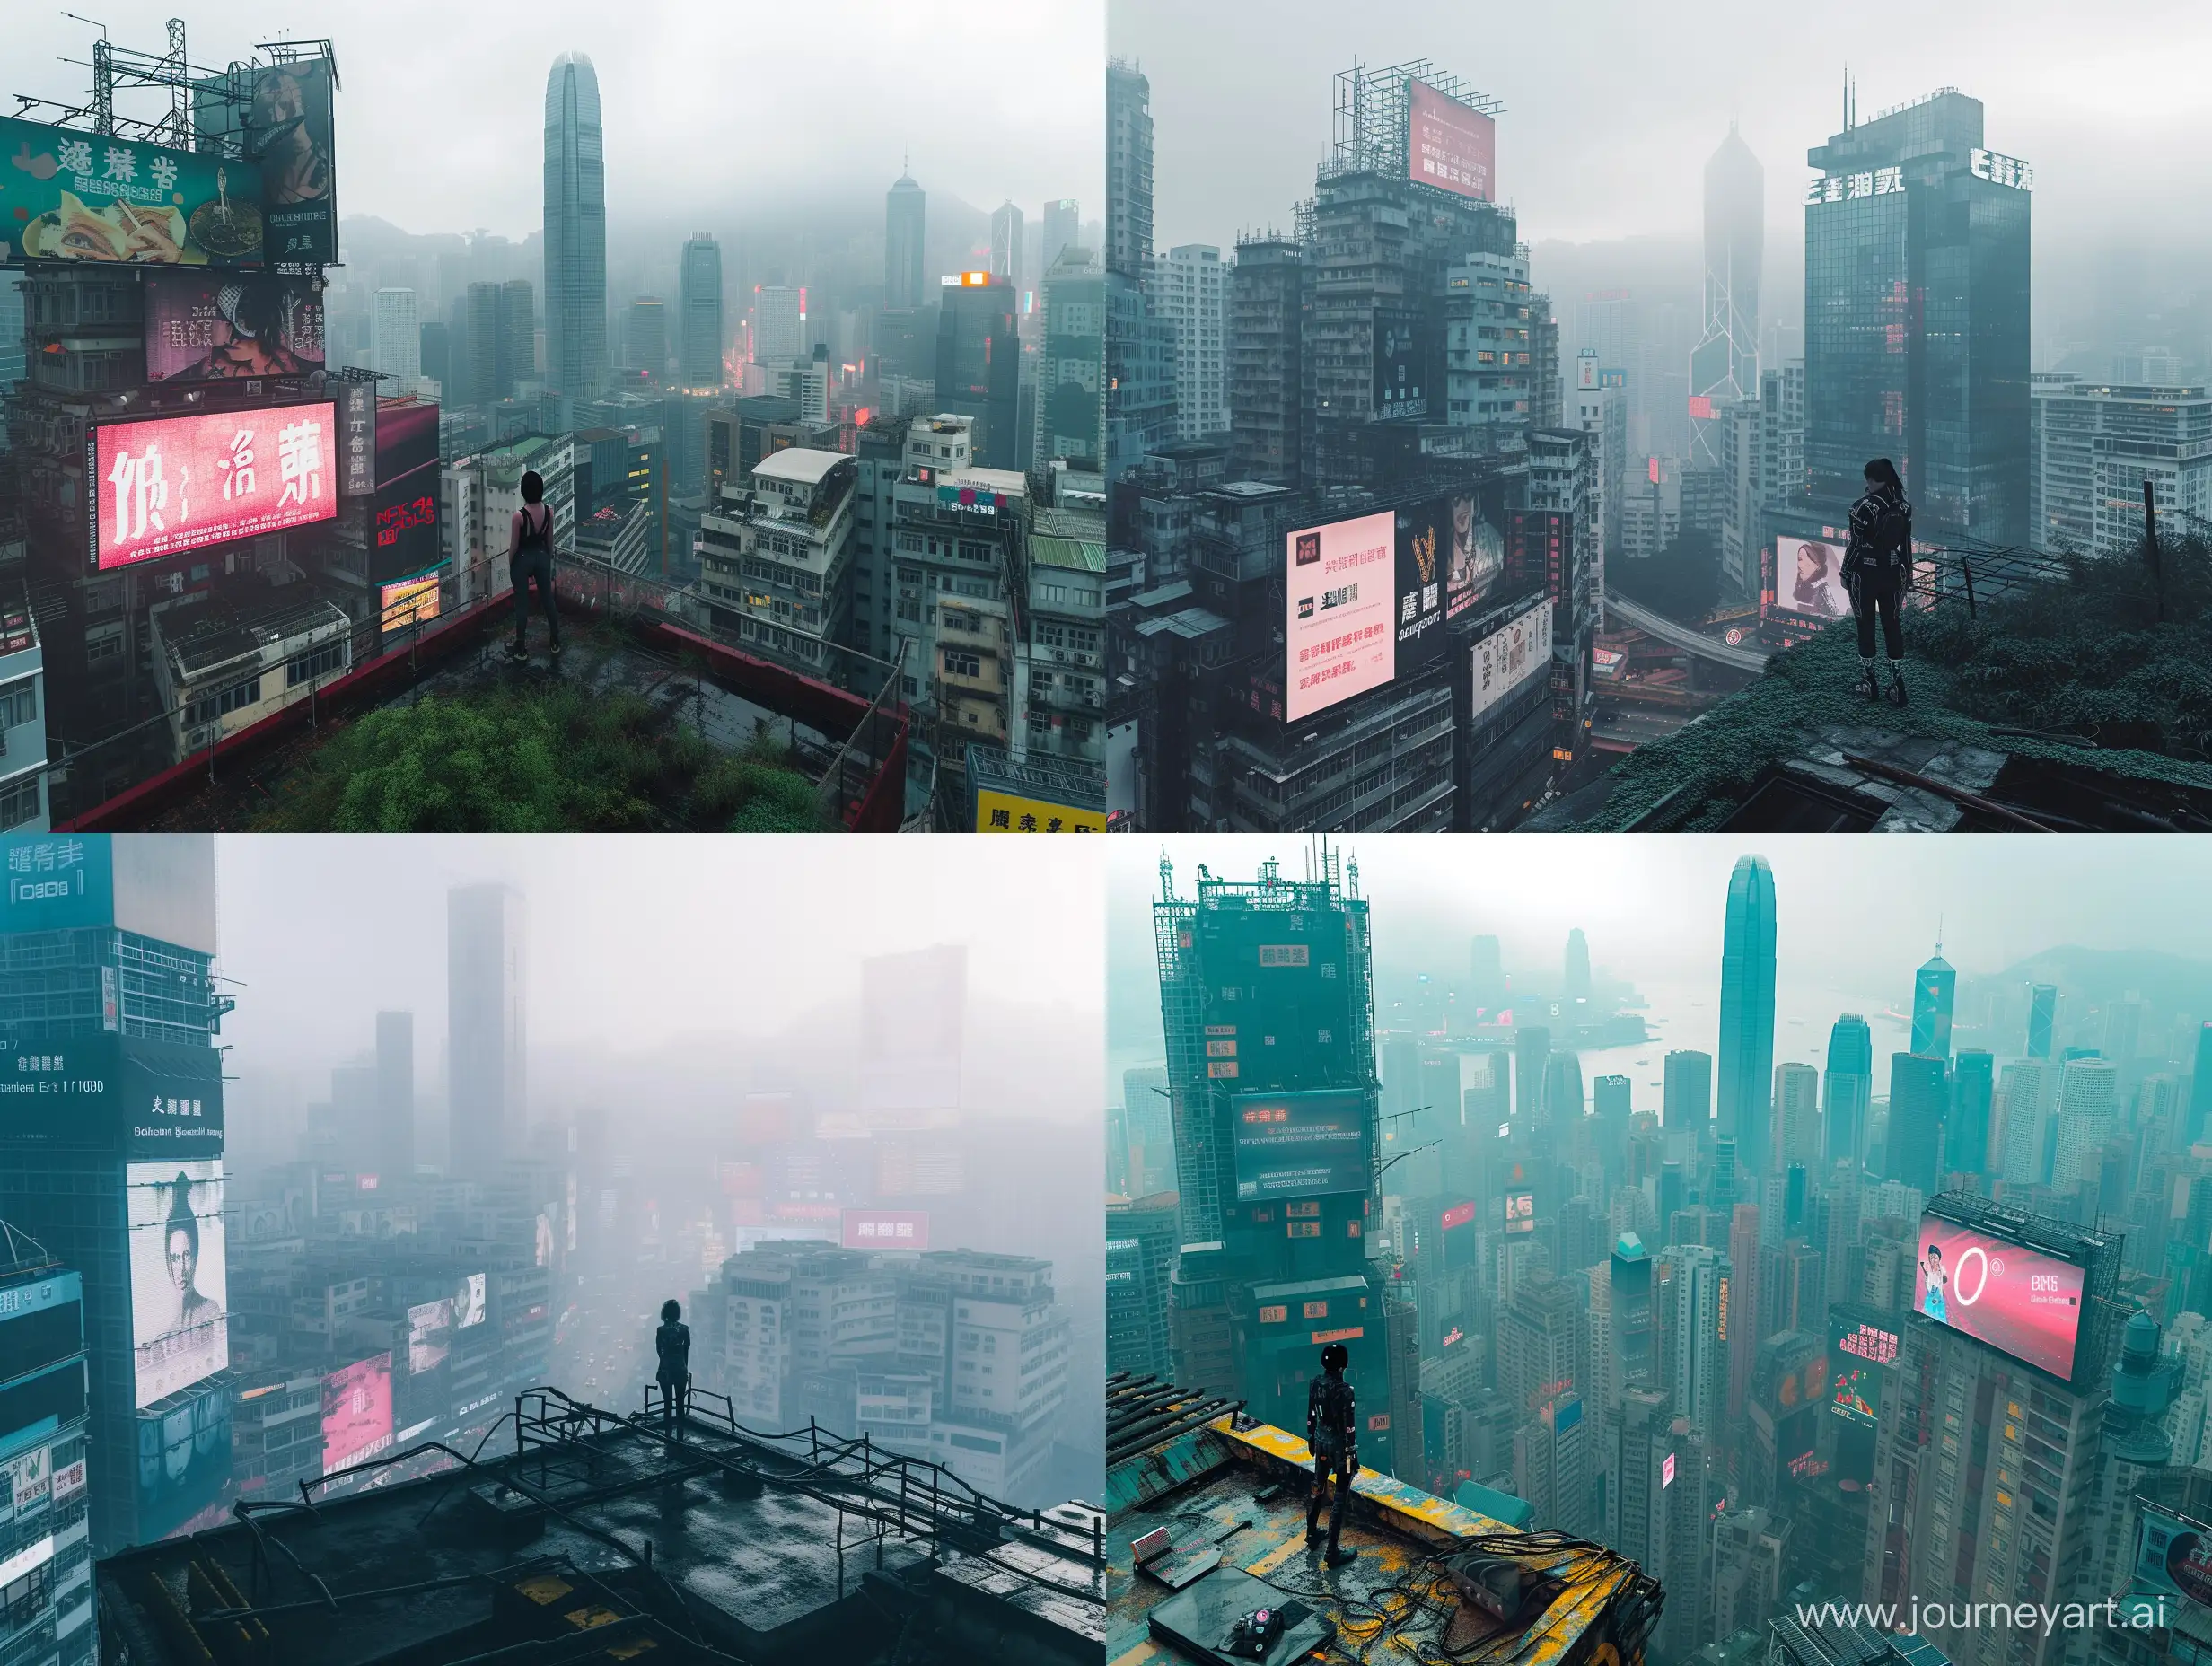 Futuristic-Cyberpunk-Cityscape-Dystopian-Skyline-with-Creative-Architectures-and-Cyberpunk-Woman